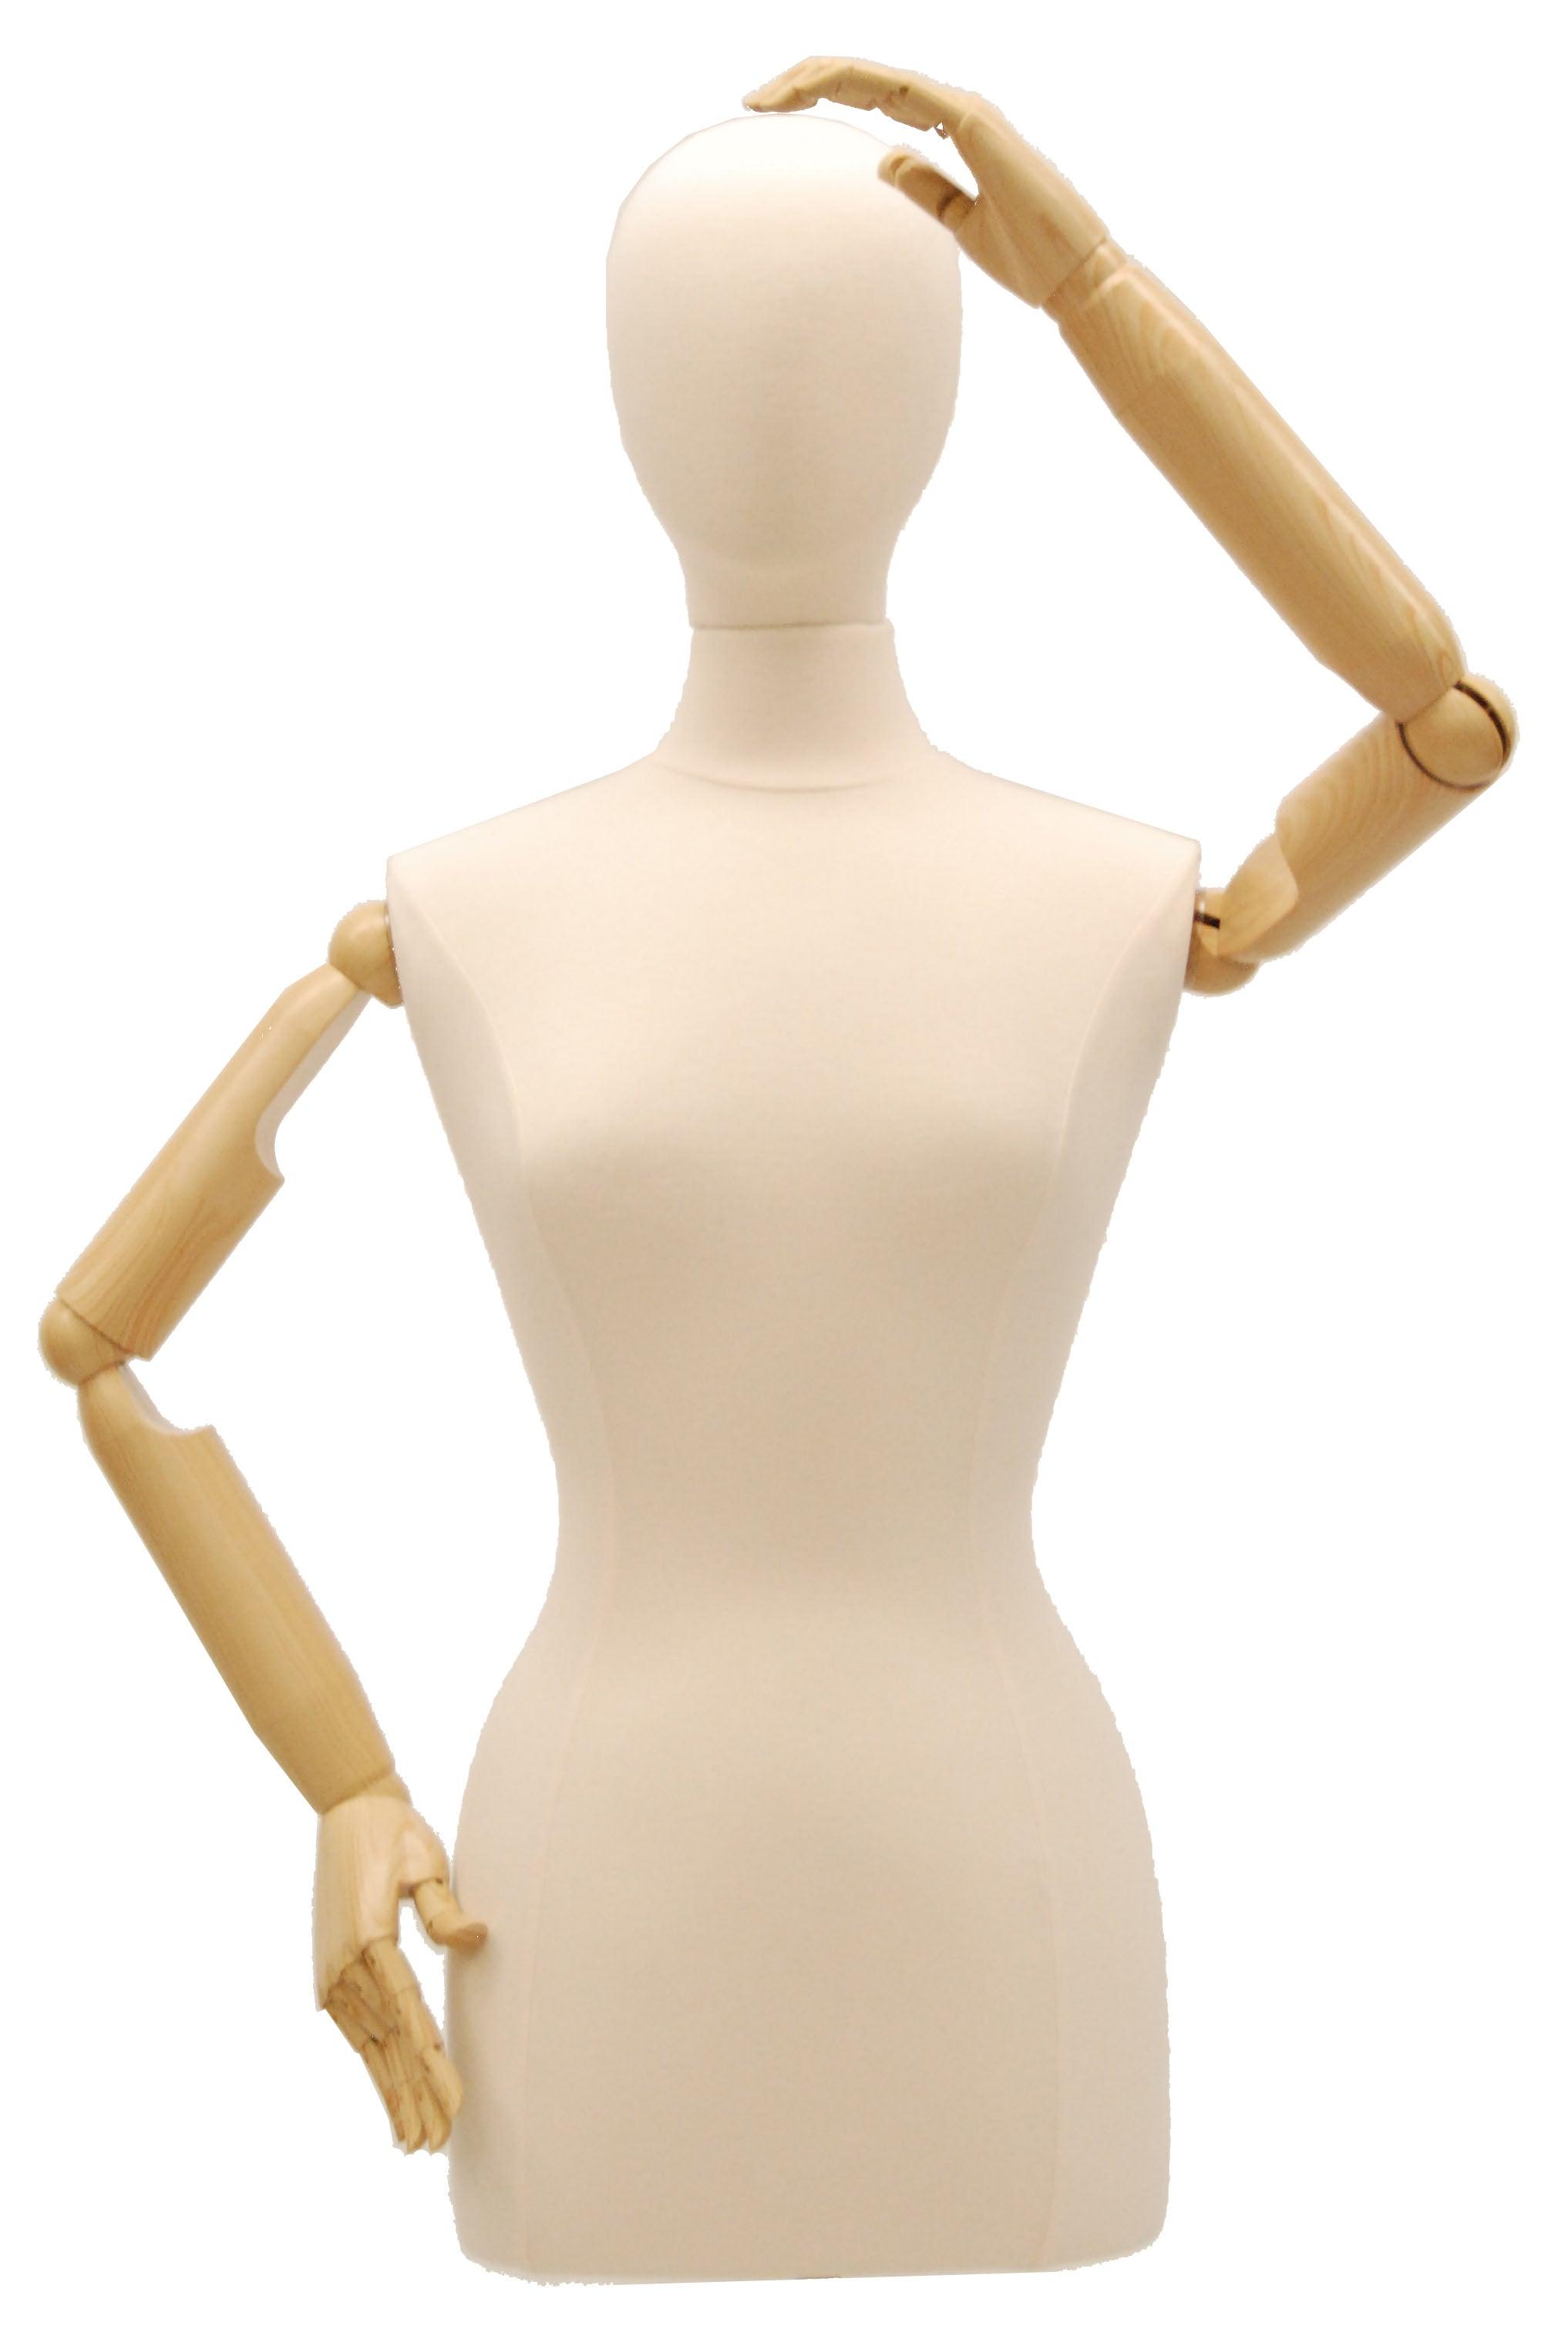 Female Foam Mannequin Head Model for Shopping Mall Display Manikin